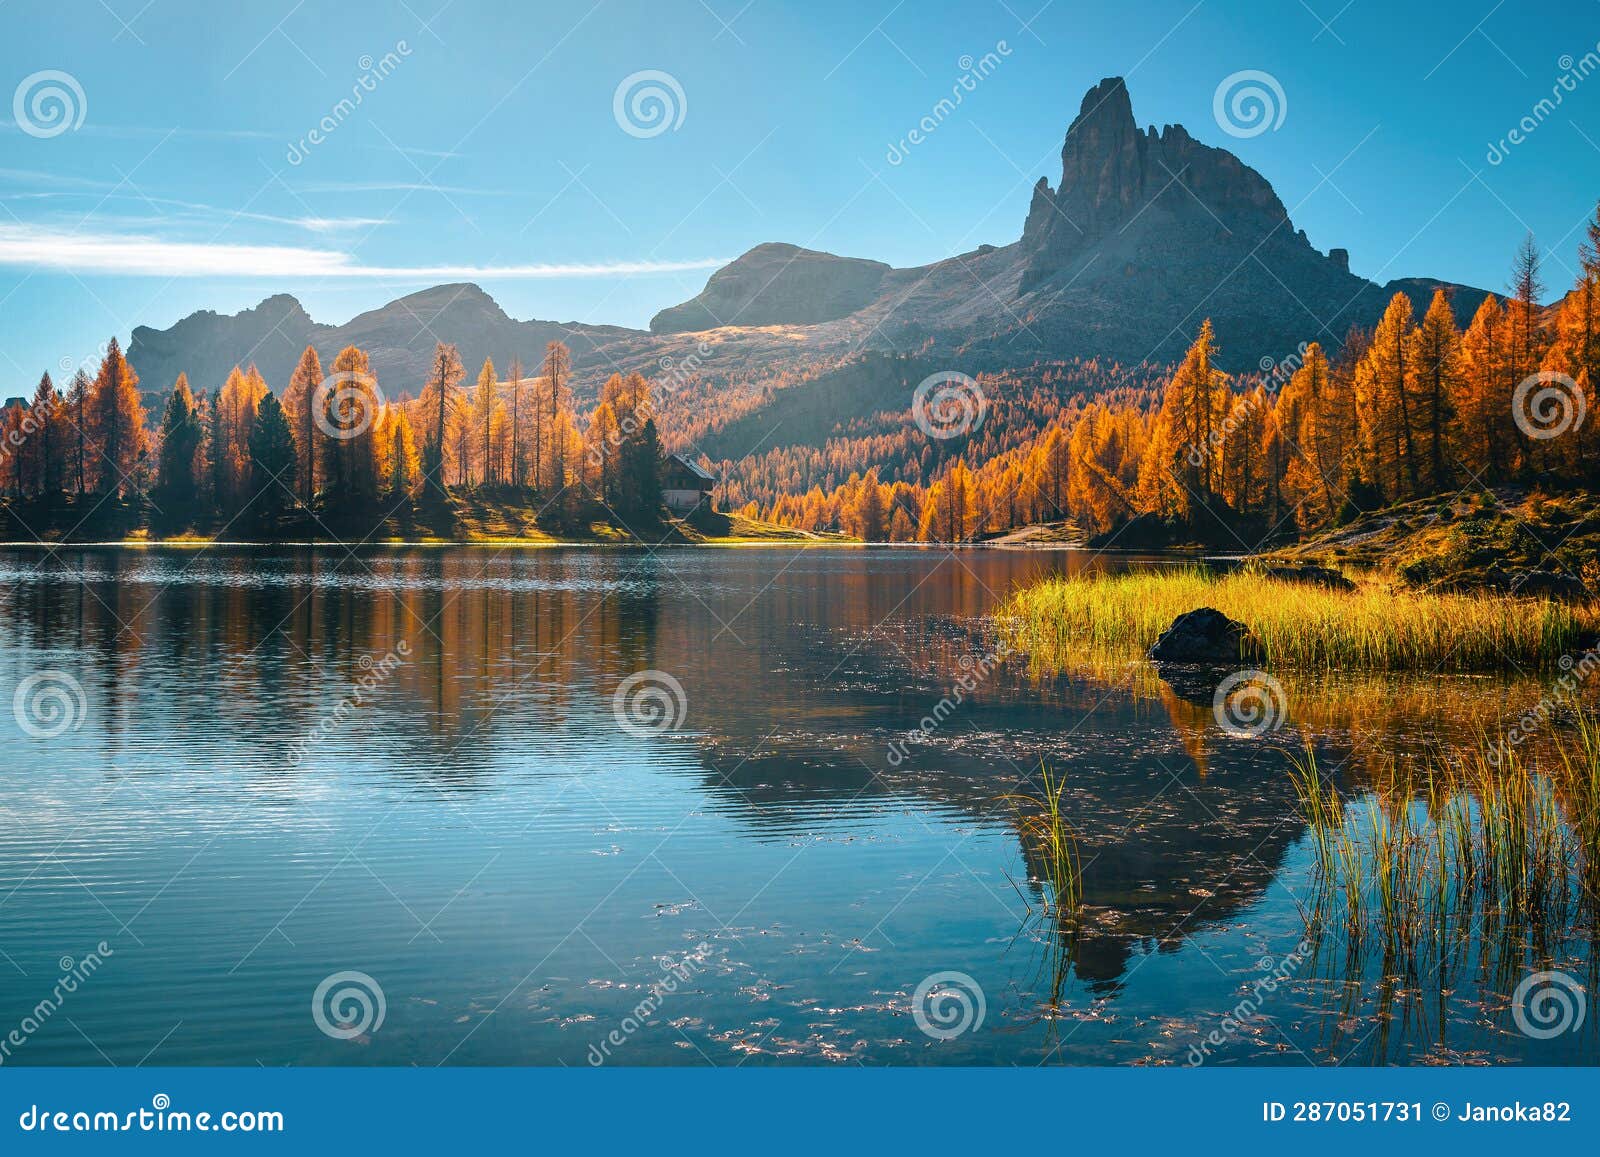 beautiful alpine lake and colorful larch forest, lake federa, dolomites